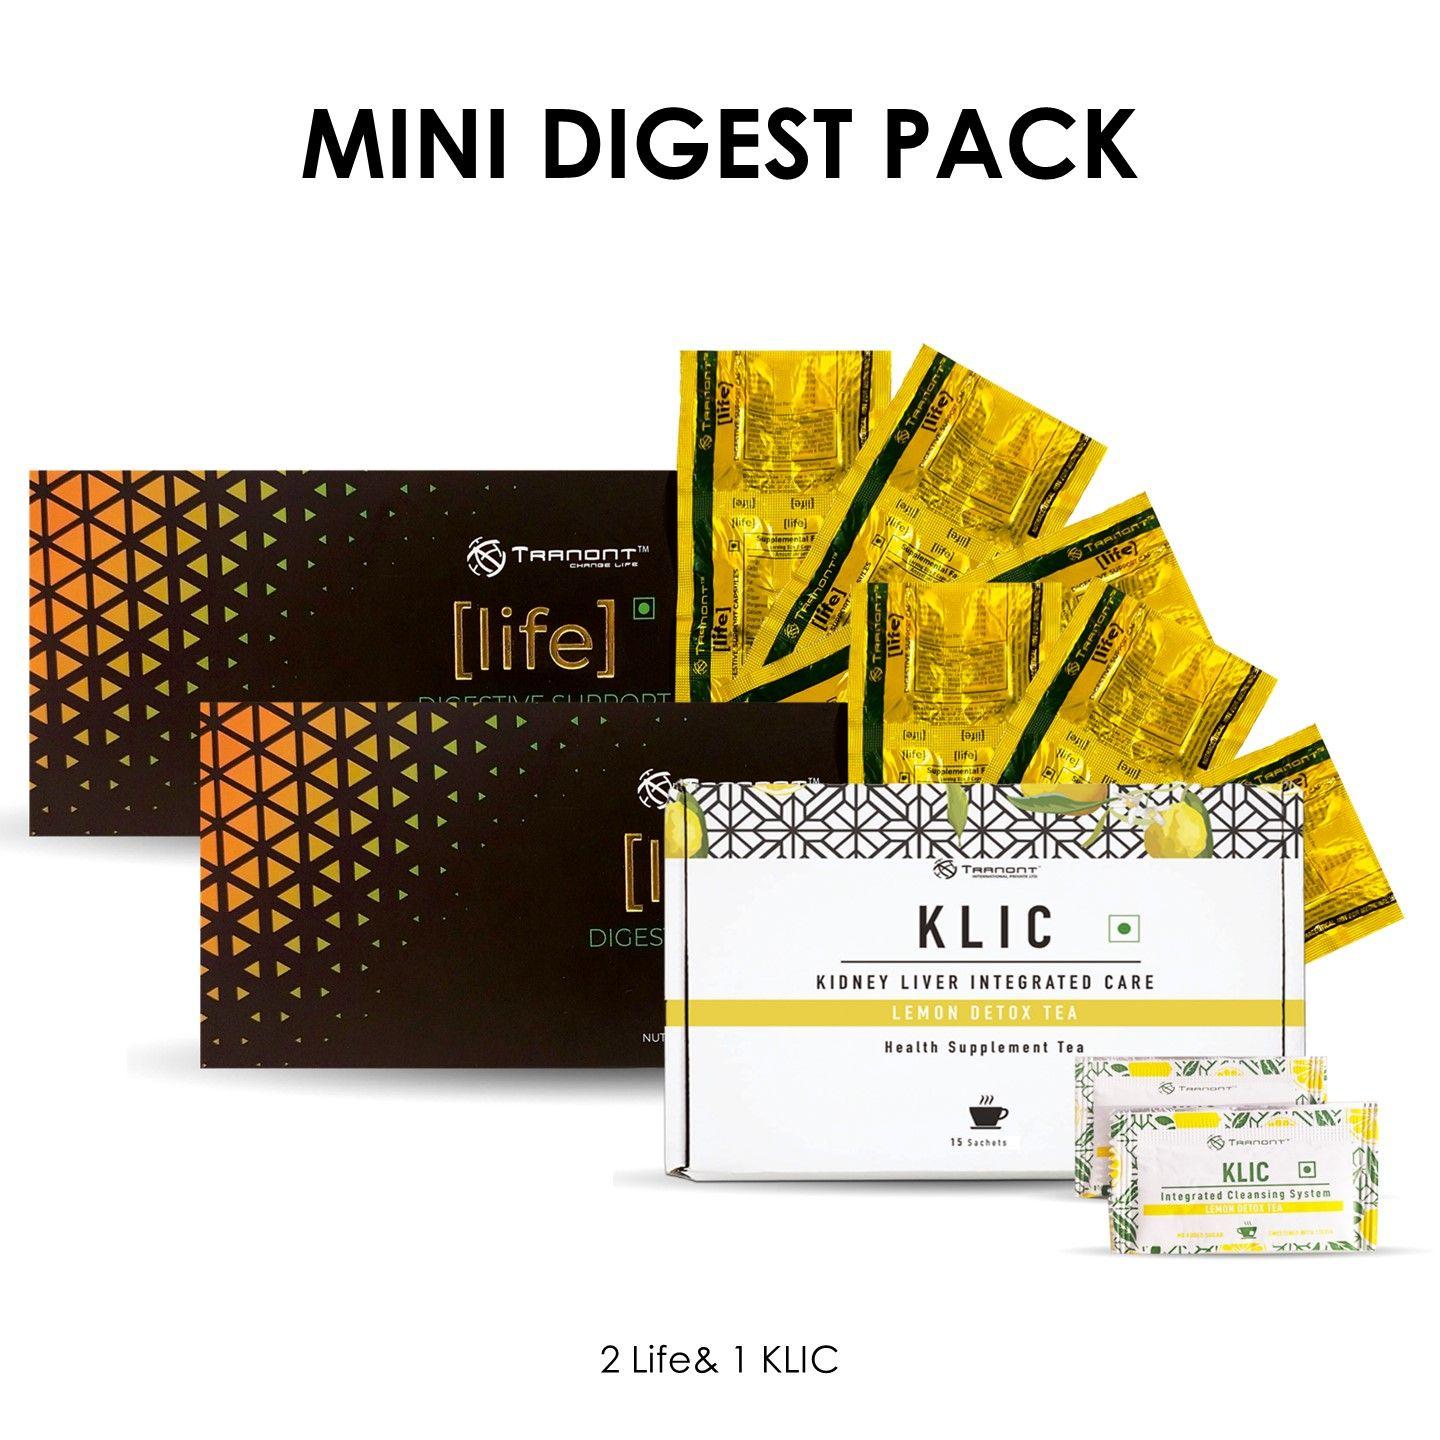 Mini Digest Pack